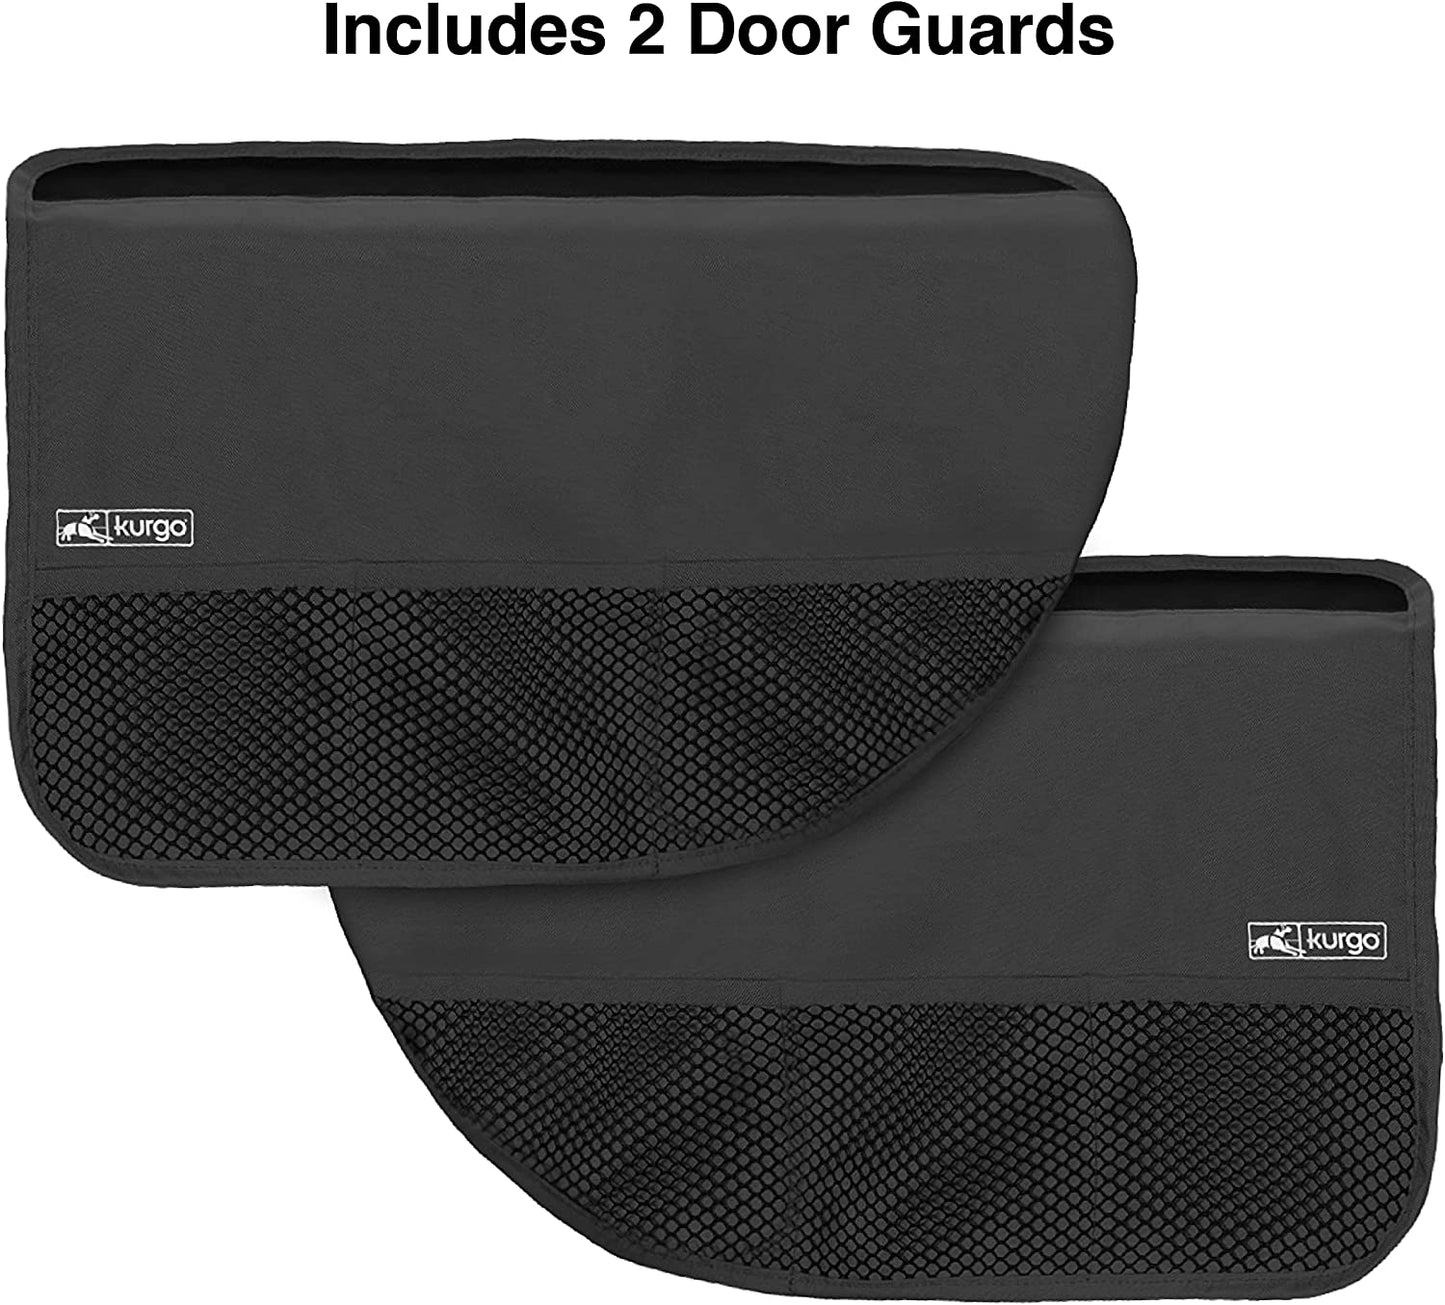 KURGO Car Door Guard - Black